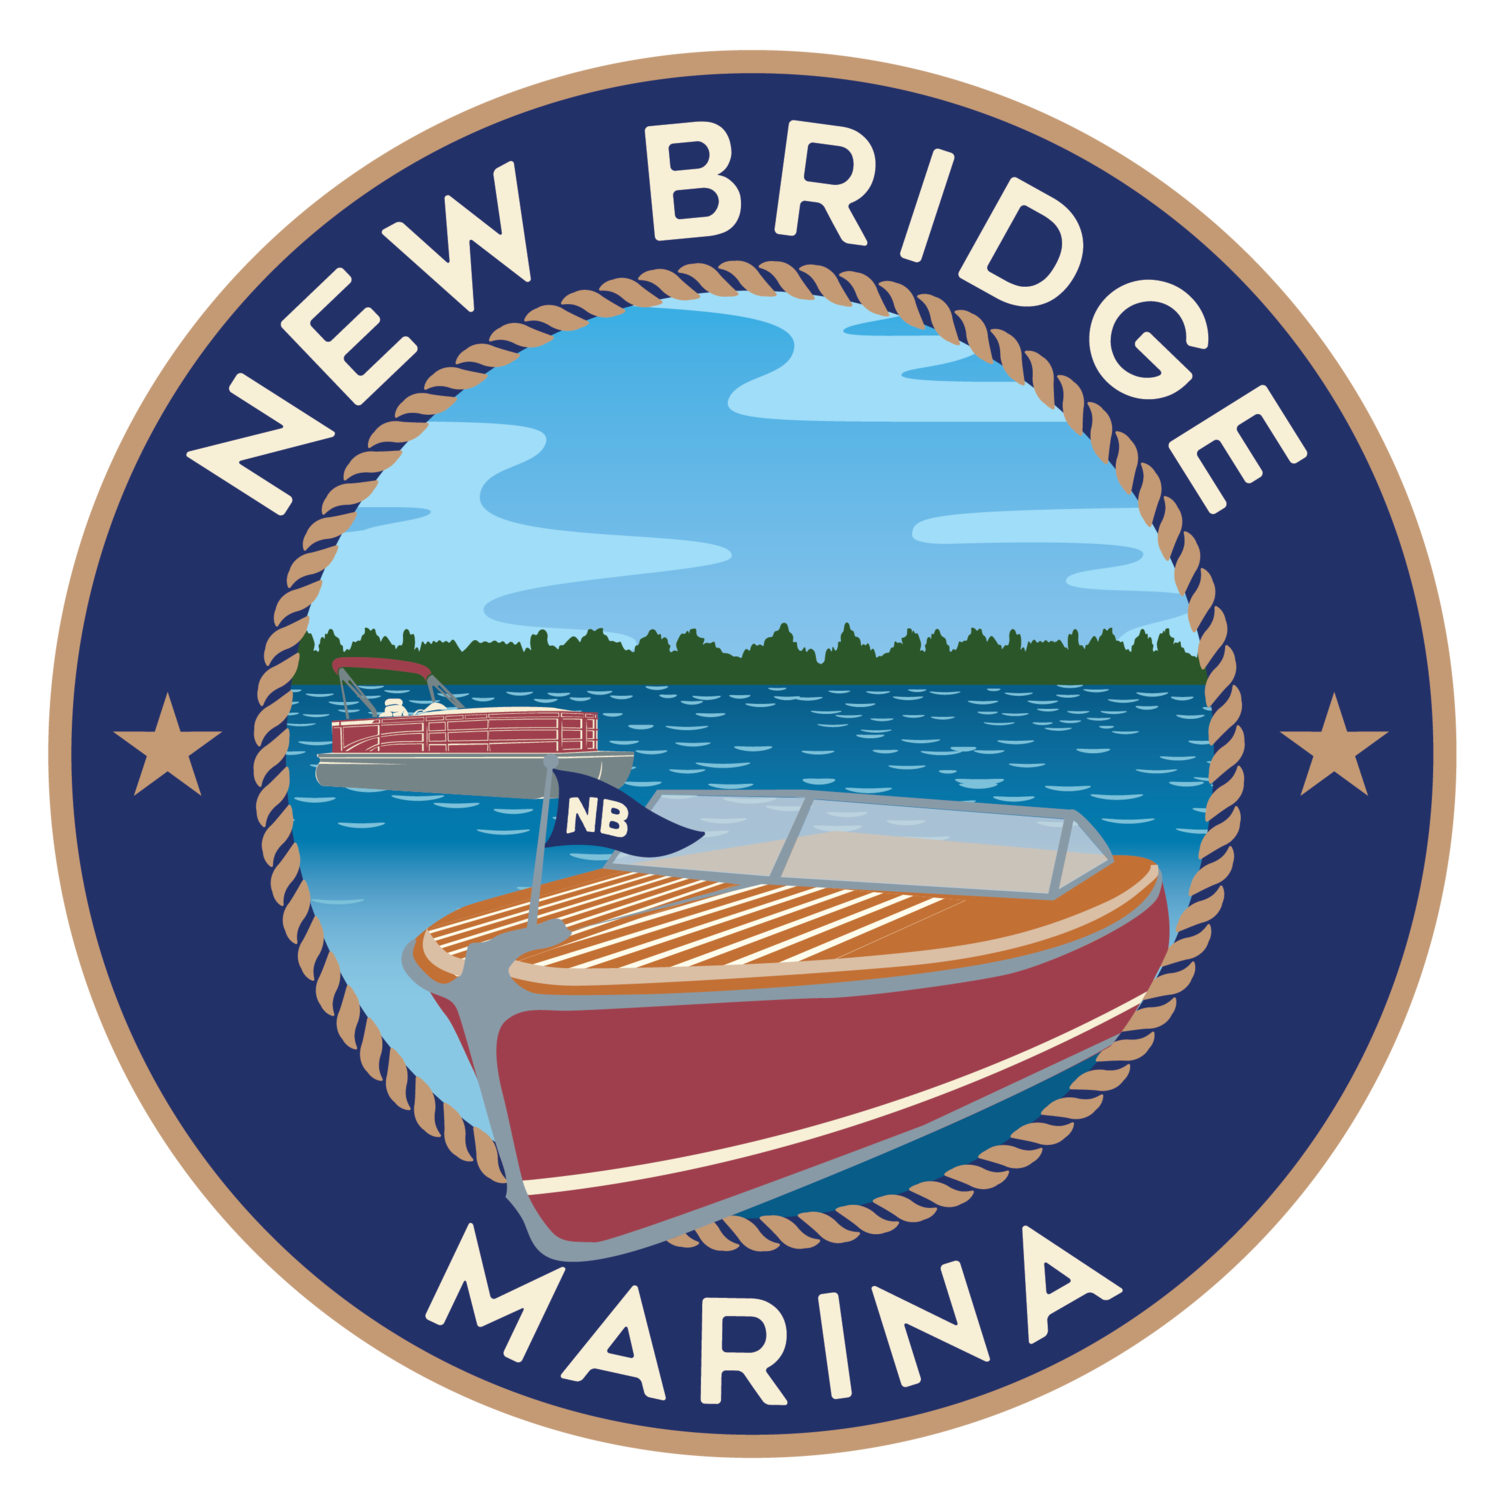 New Bridge Marina